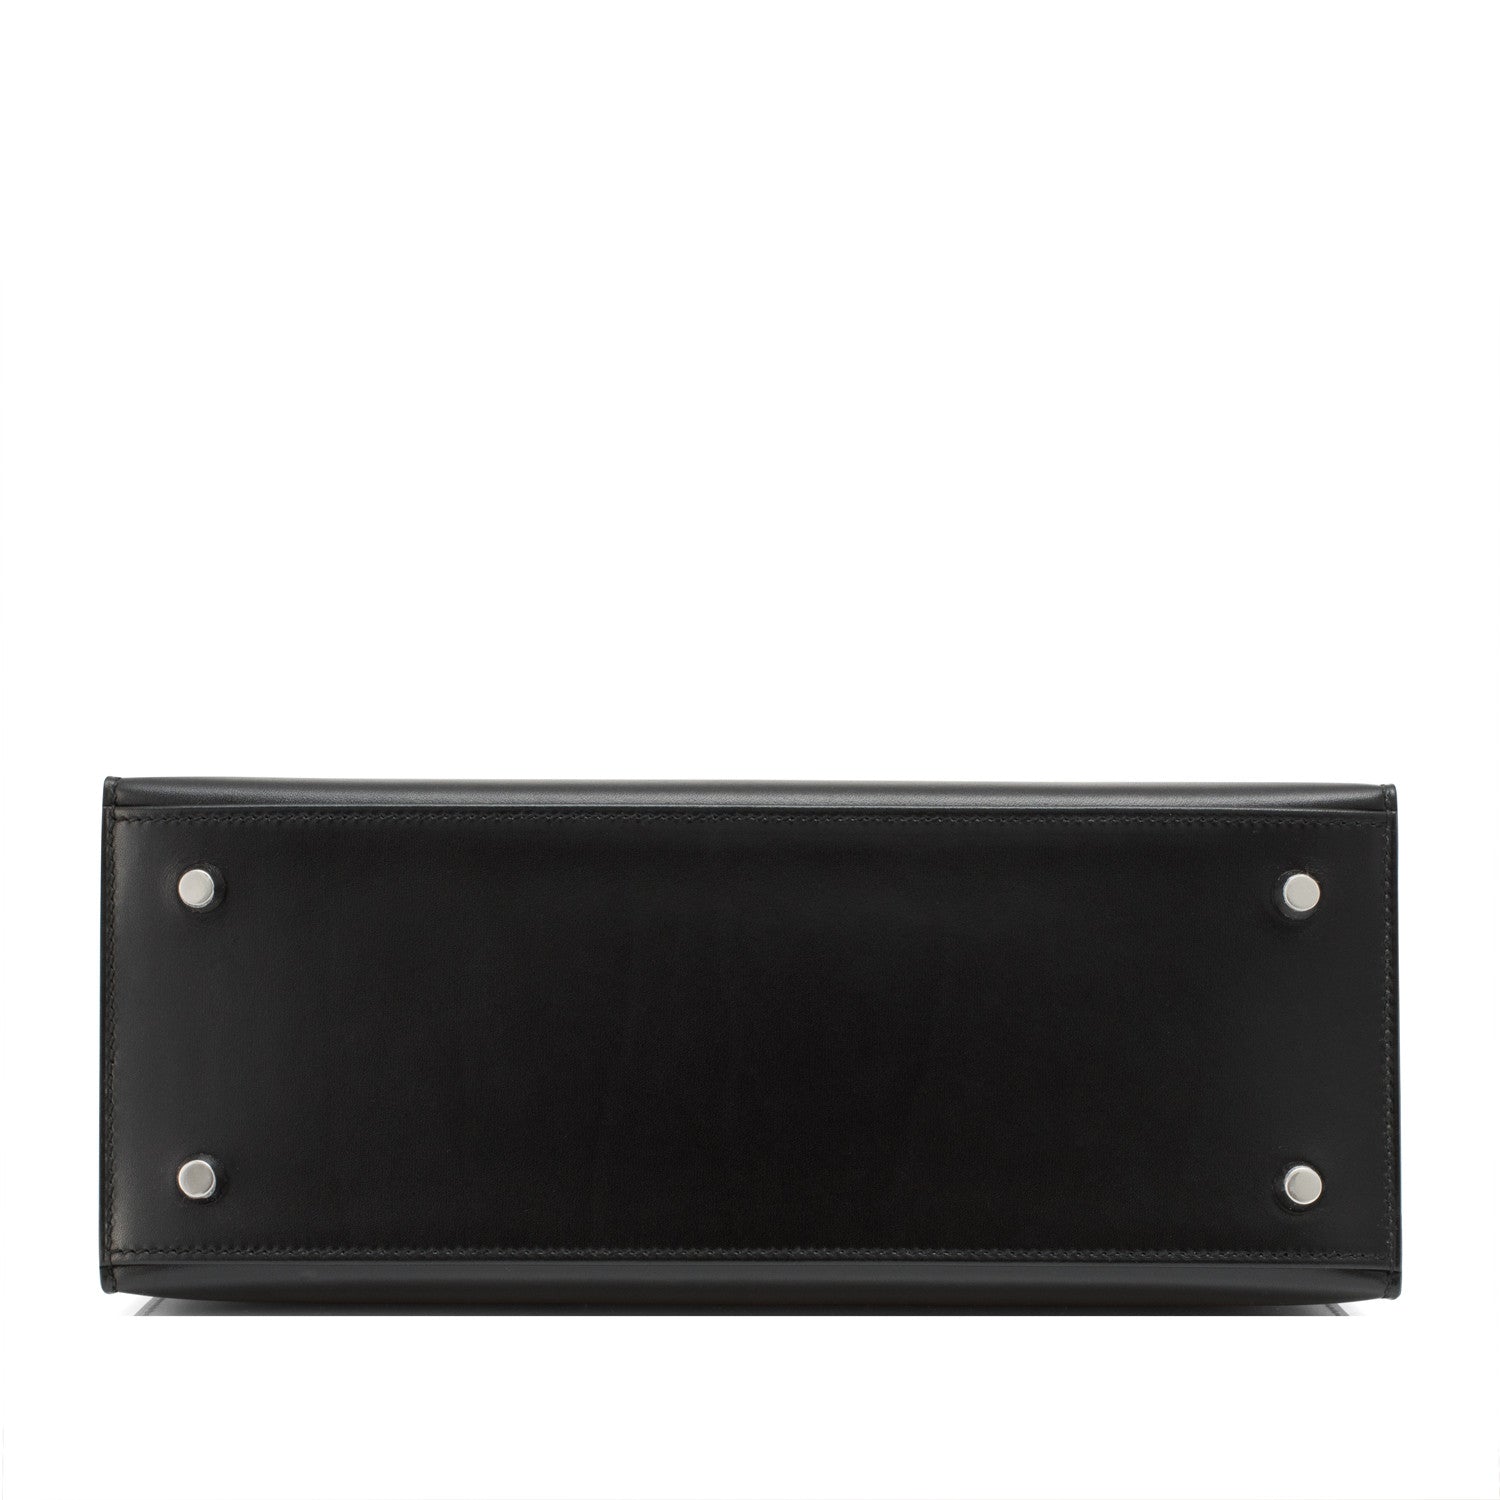 Hermes Kelly Sellier 28 Bag Black Box Leather Palladium Hardware